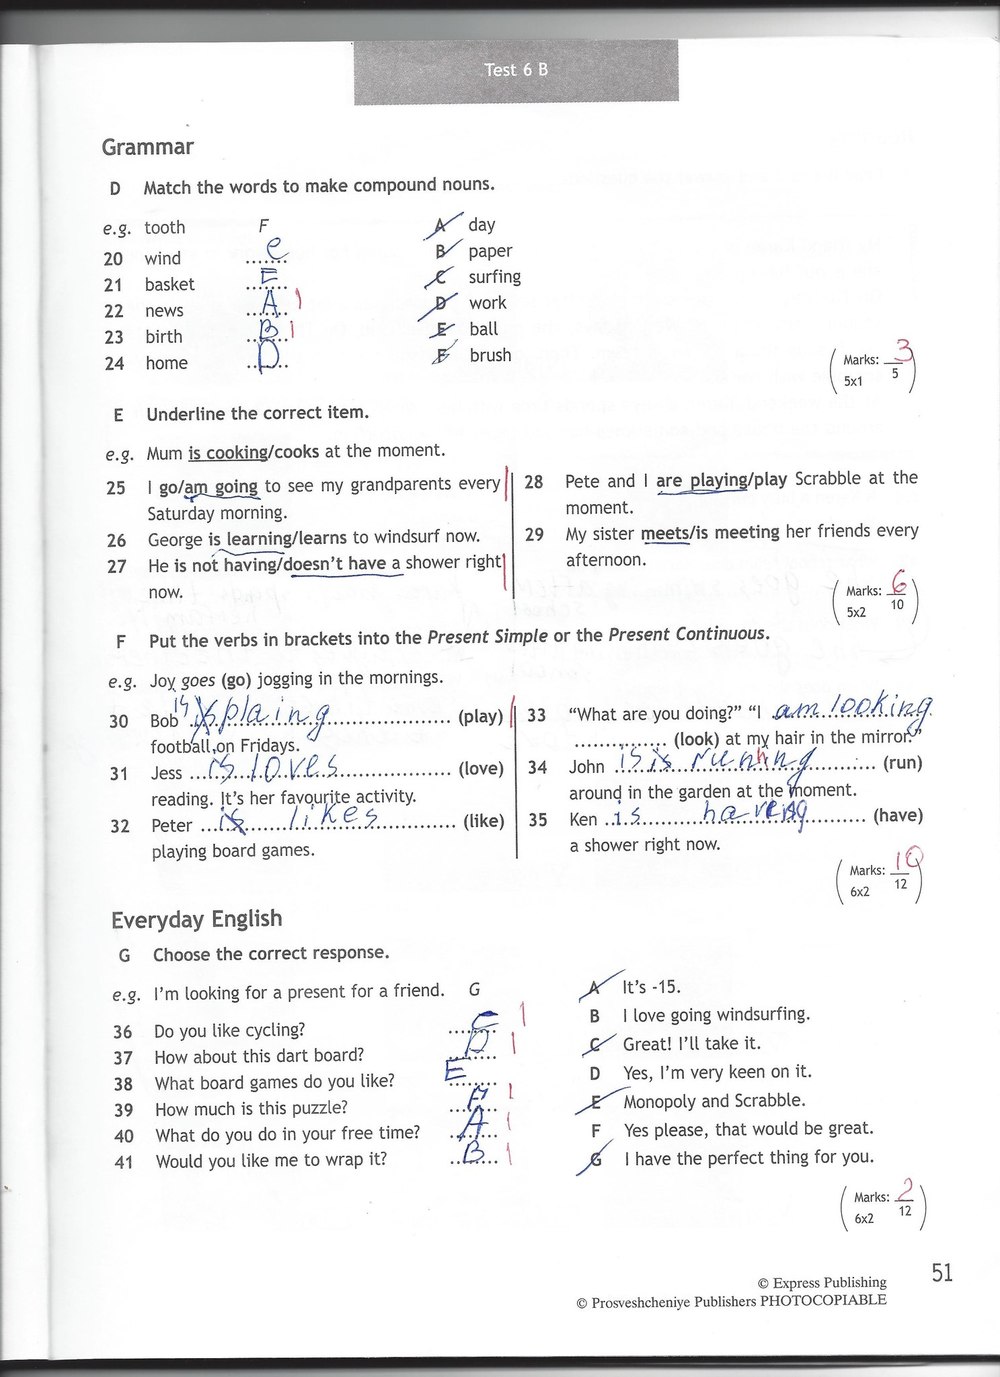 Тест бук 6 класс ответы. Англ тест Grammar 6 класс. Test 6a 6 класс ответы Spotlight. Test 7b по английскому 6 класс Spotlight. Spotlight 3 Test booklet 6a 6b ответы.